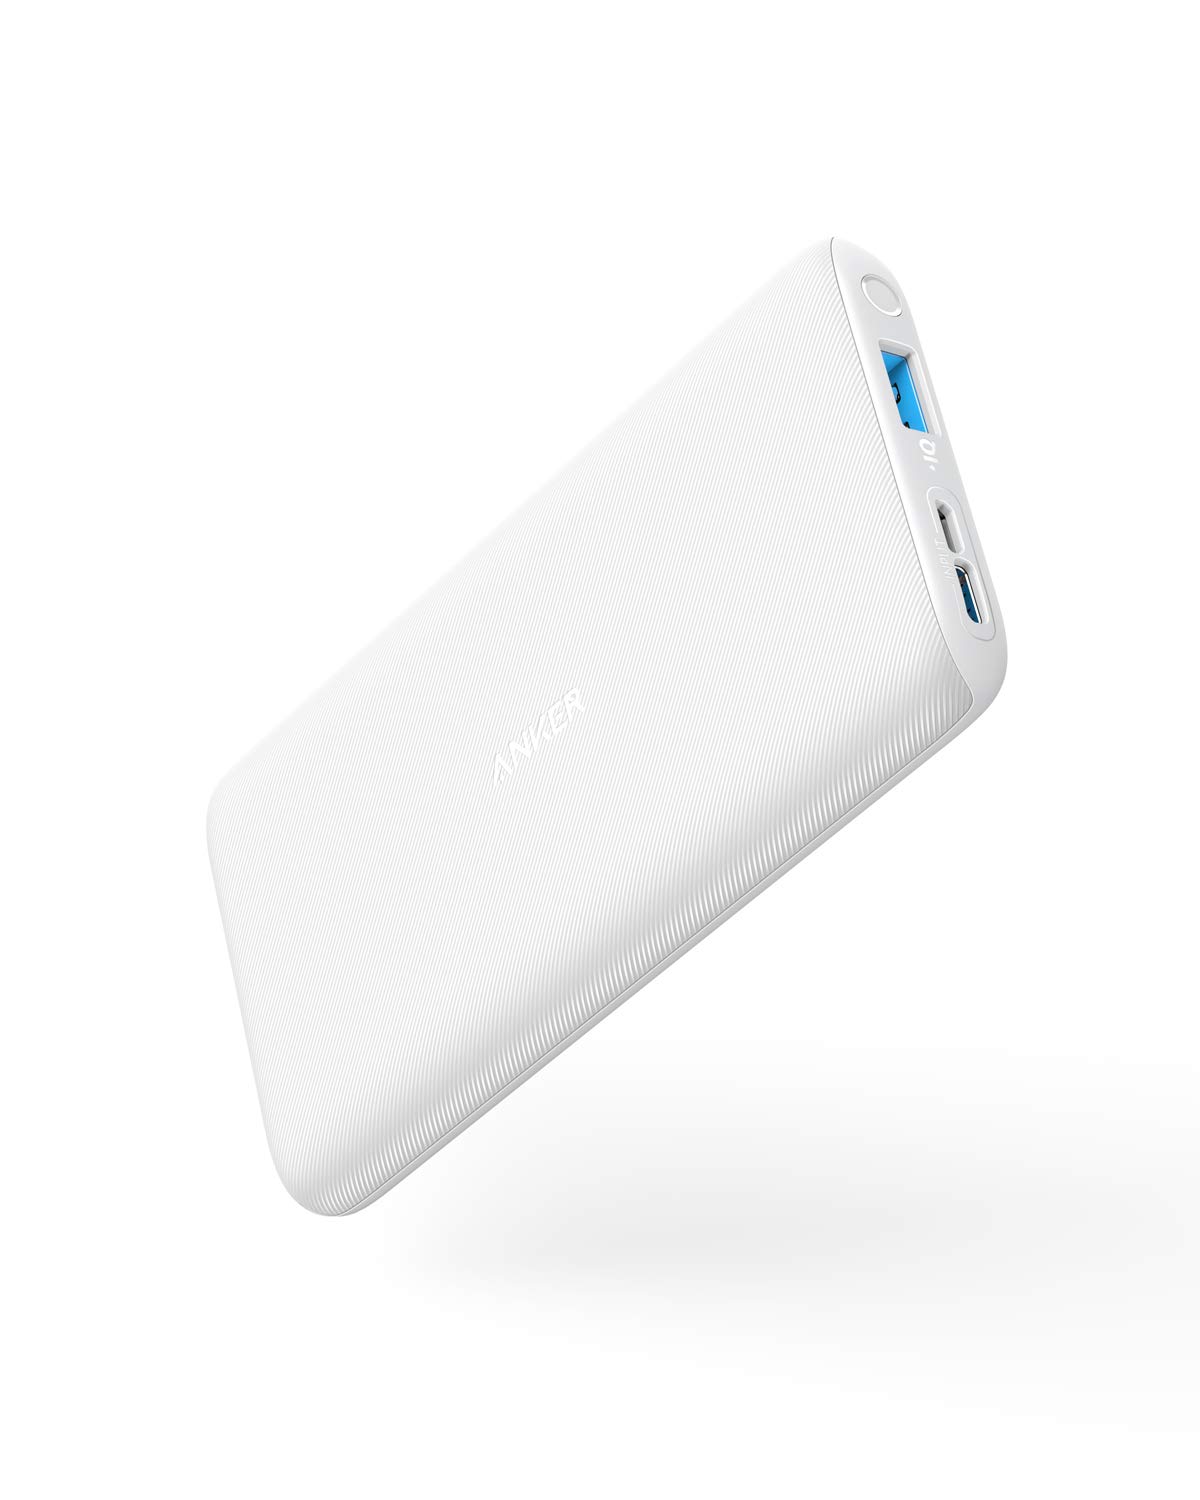 Anker、薄型の大容量モバイルバッテリー｢PowerCore Lite 10000｣のホワイトモデルを発売